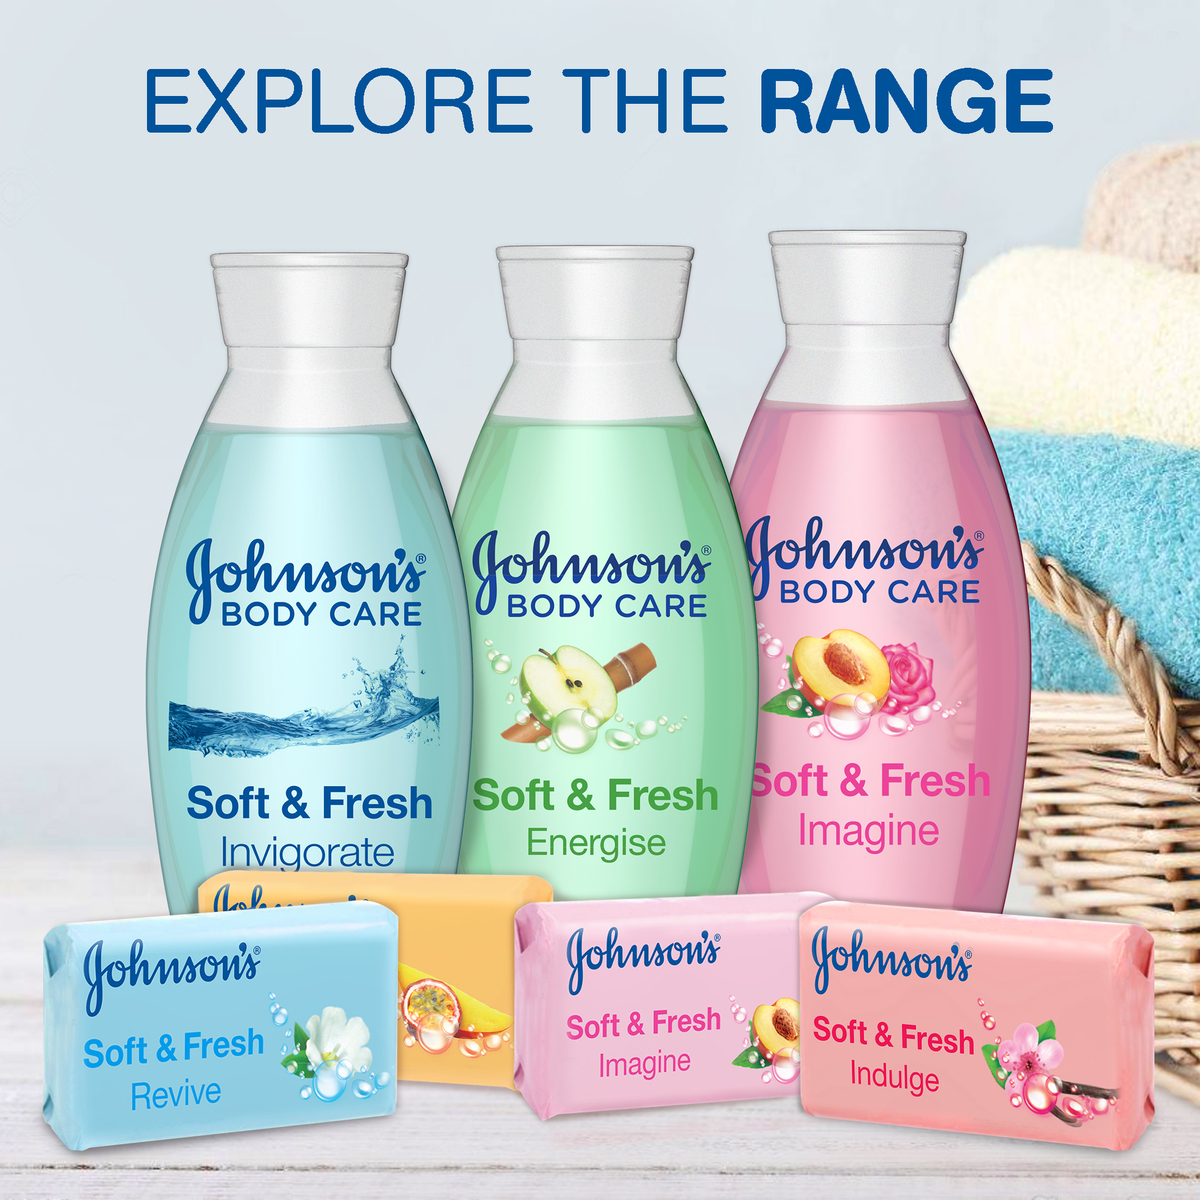 Johnson's Bath Soap Soft & Fresh Indulge 125 g